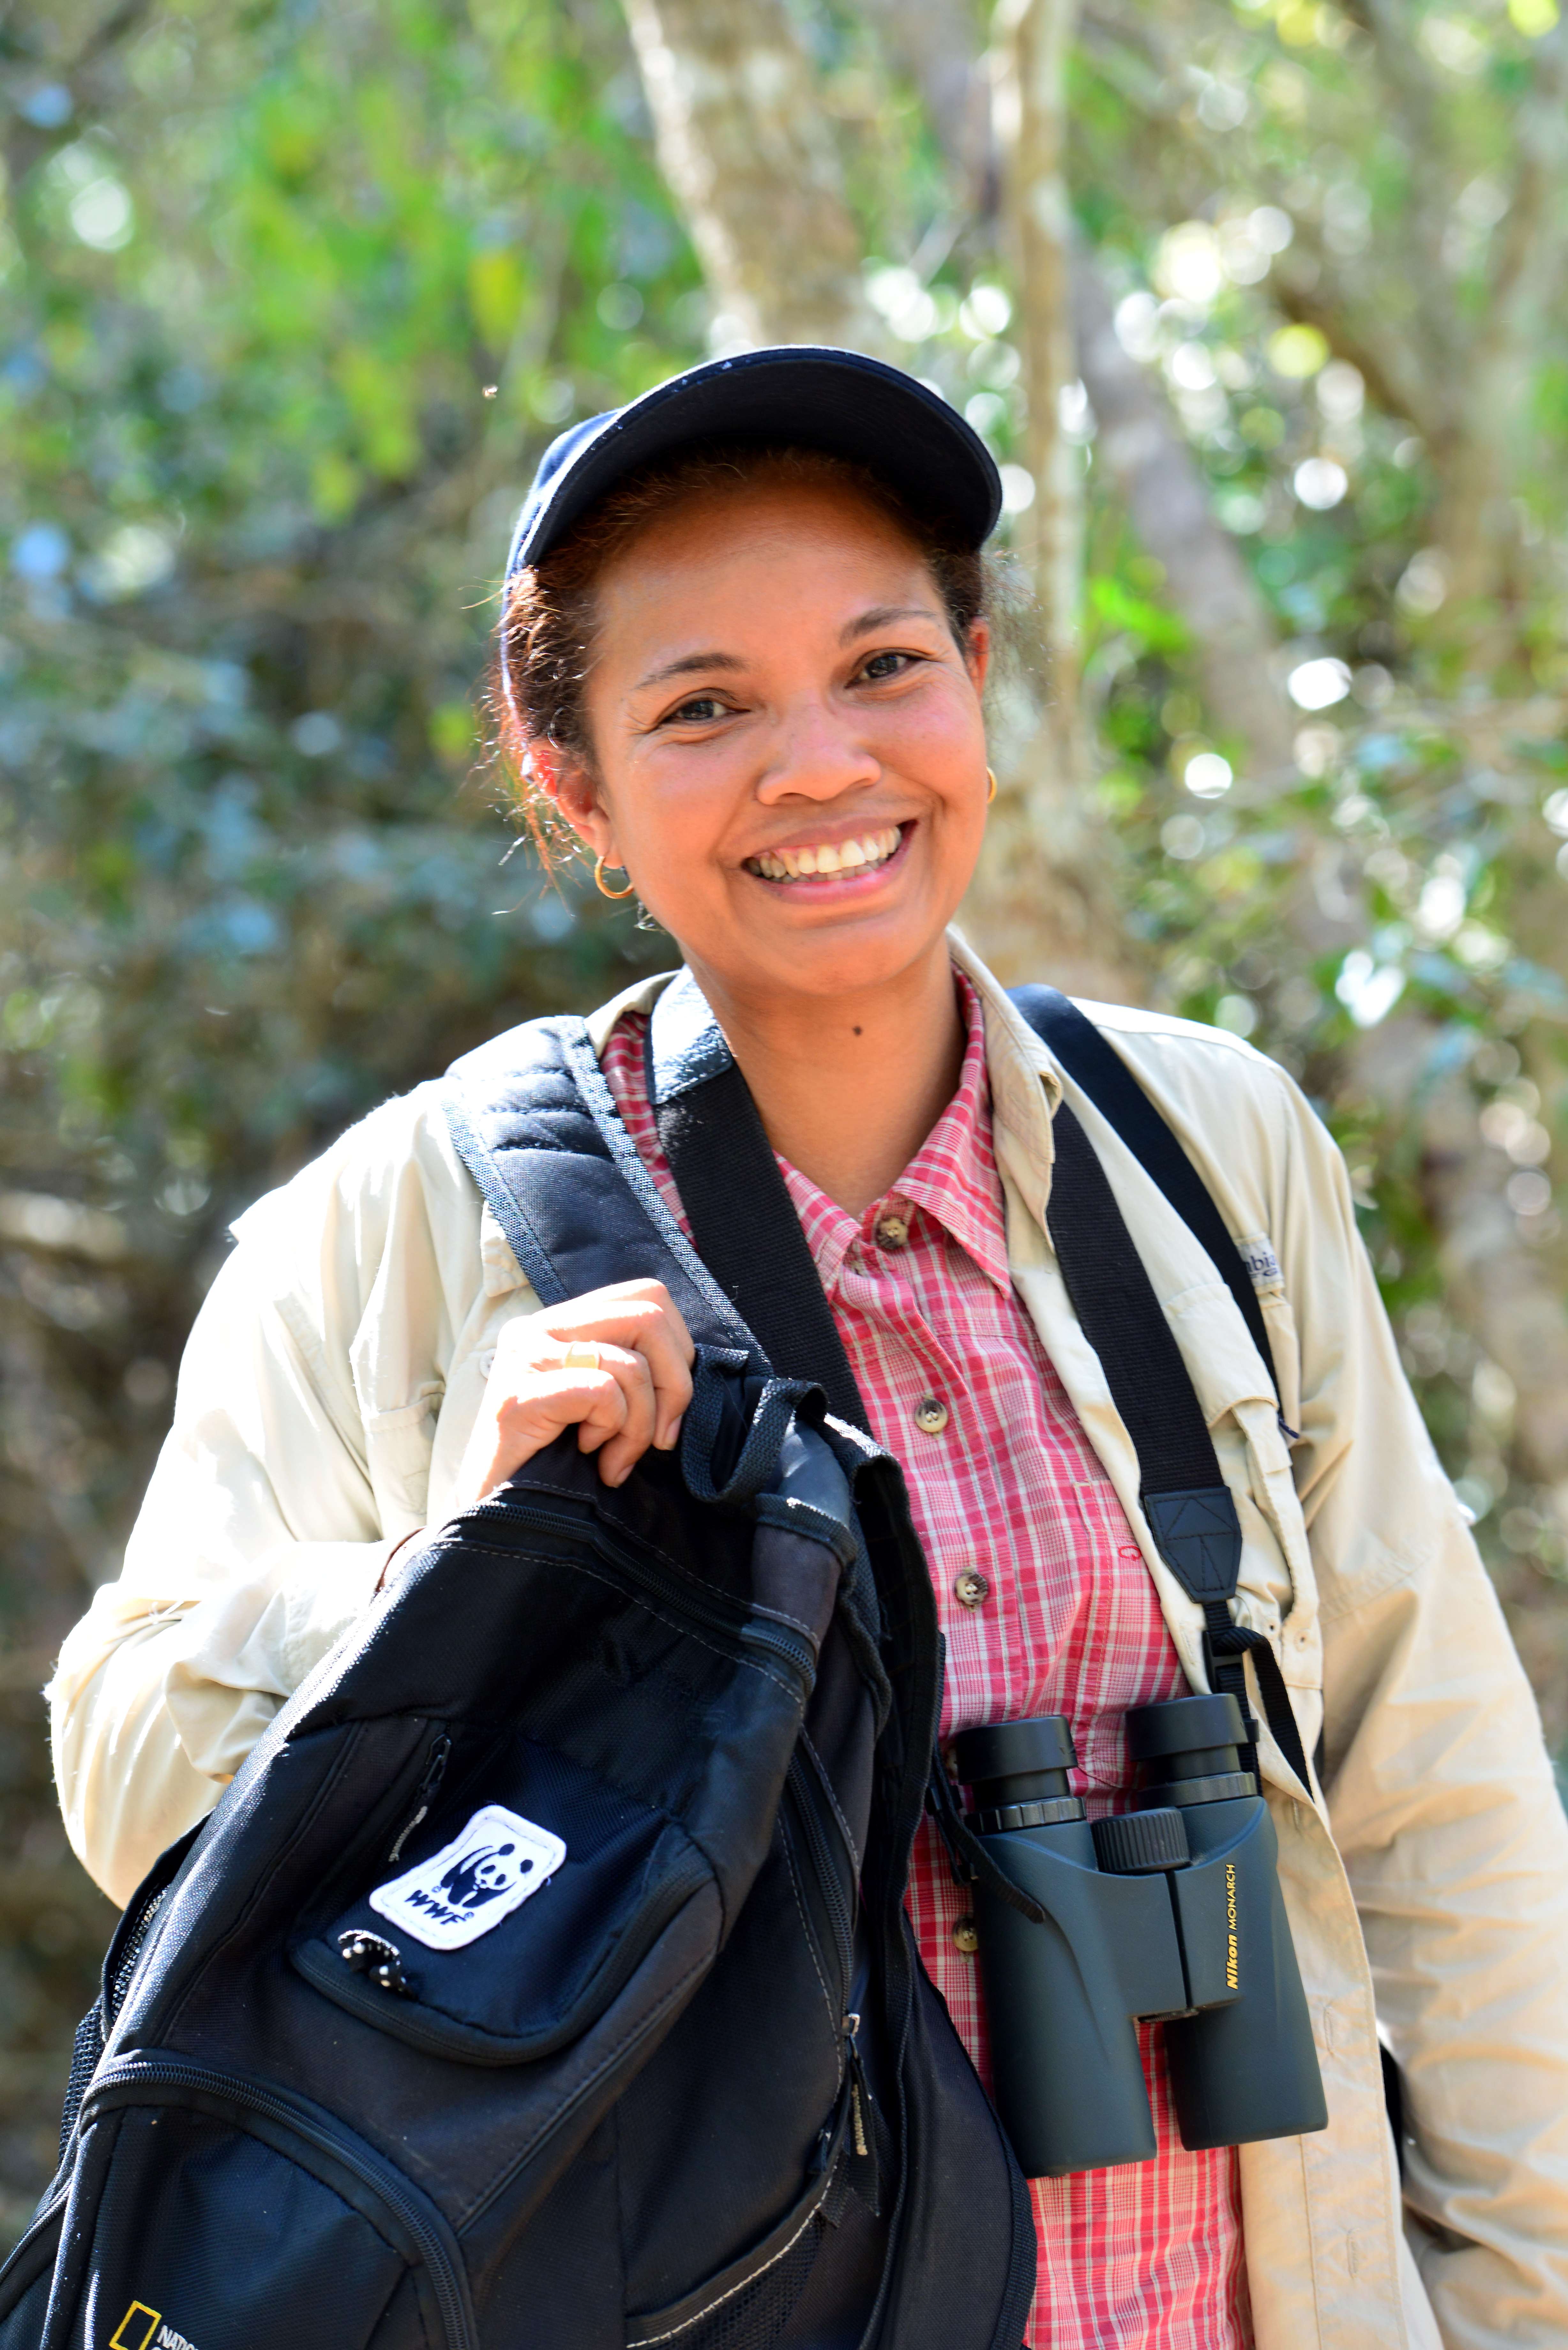 Domoina, WWF Madagascar Landscape Manager for the Tulear region, in Zombitse National Park. © Rachel Kramer/WWF-US